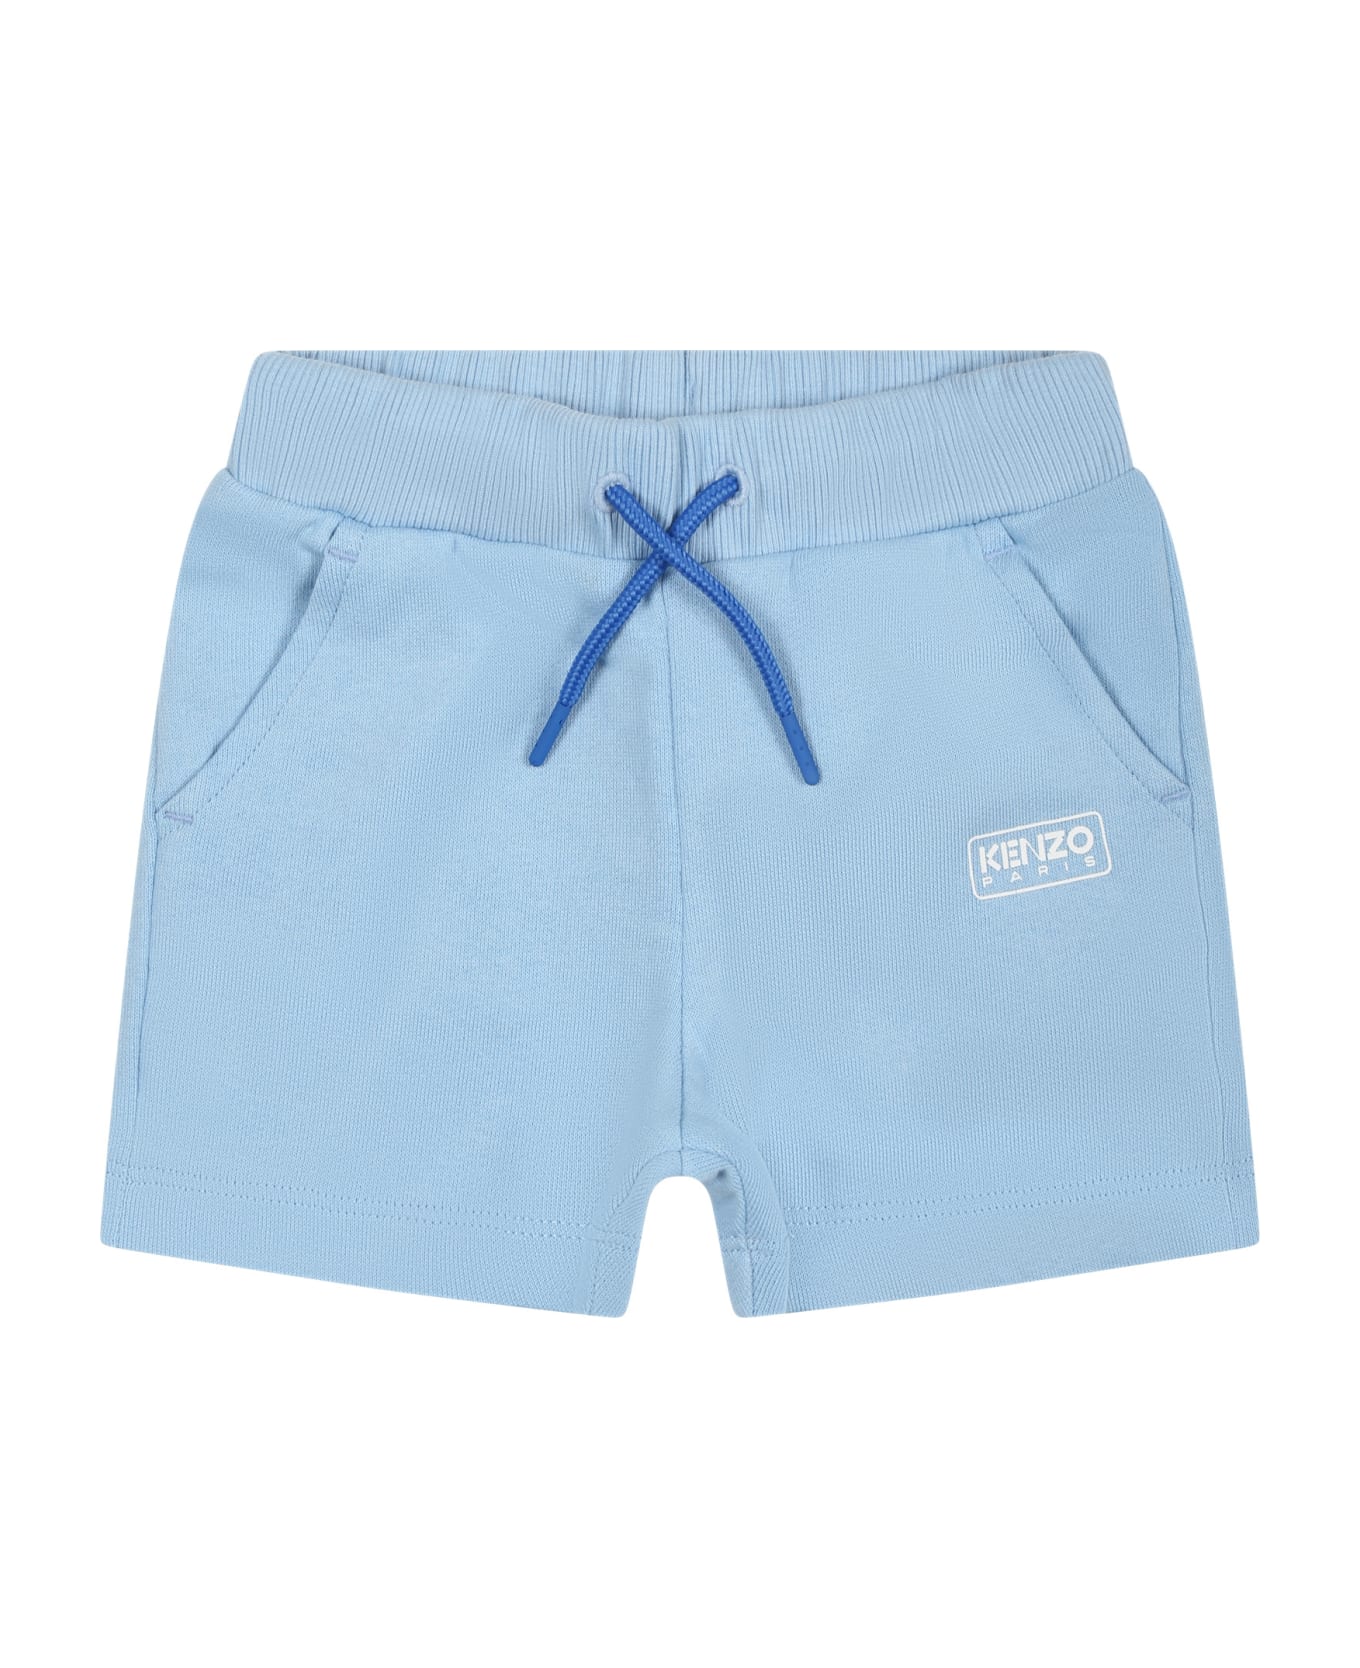 Kenzo Kids Light Blue Shorts For Baby Boy With Logo - Light Blue